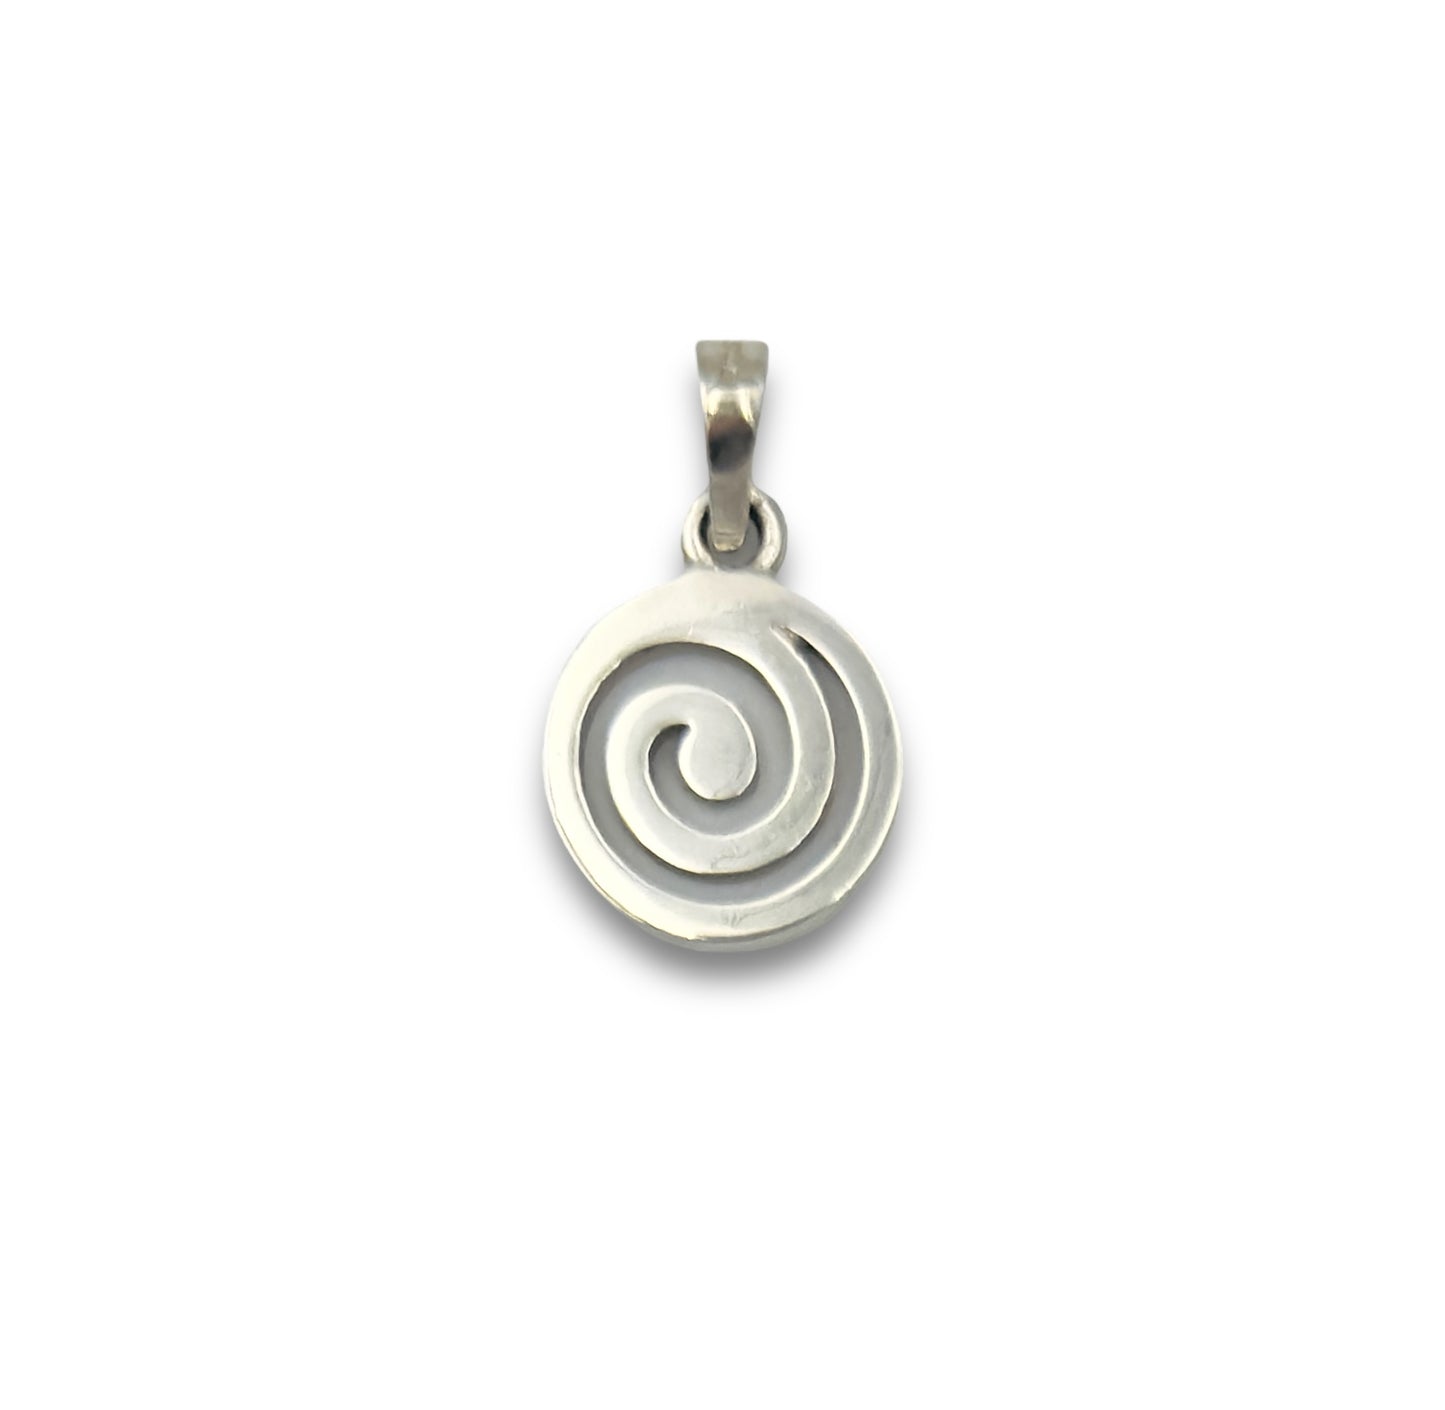 Silver Spiral design pendant